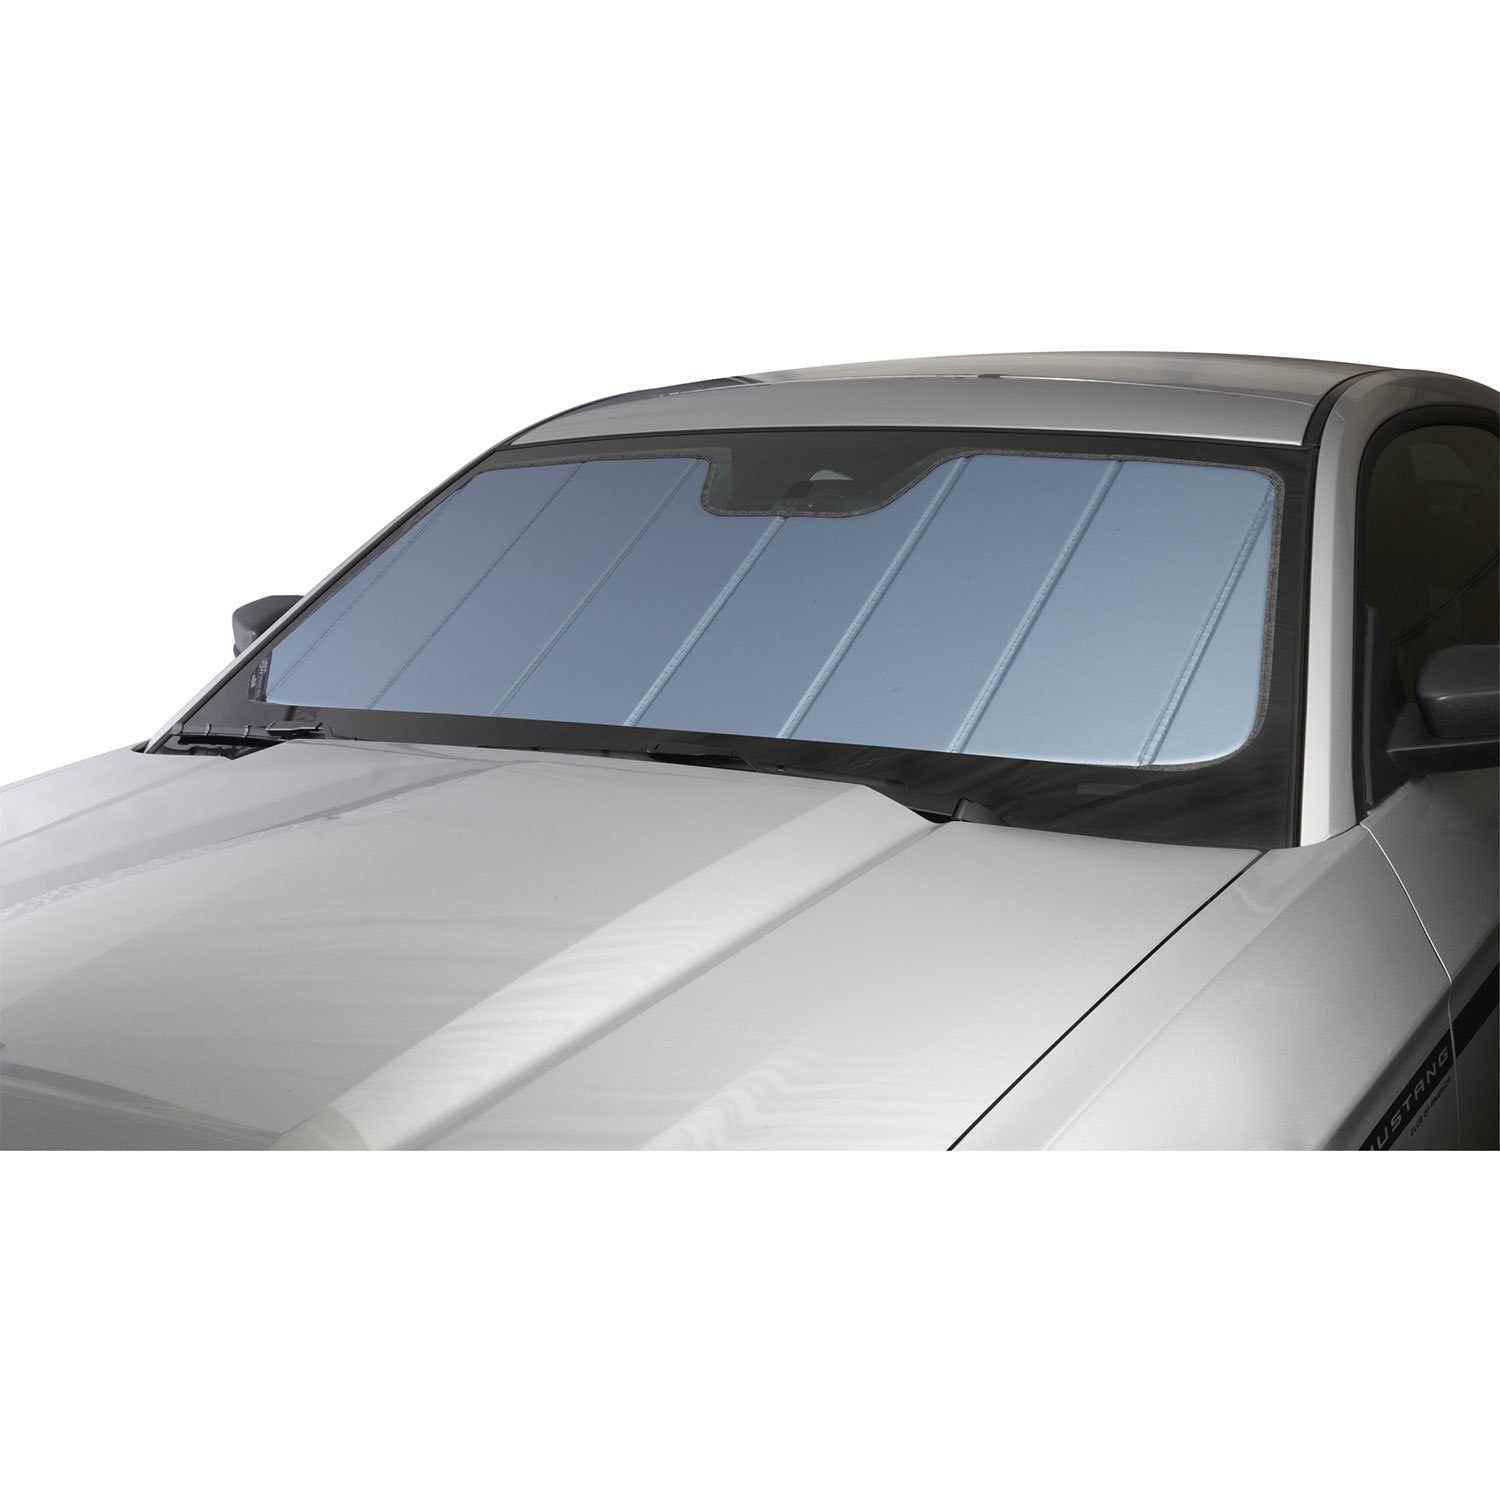 Covercraft UVS100 Custom Sonnenschutz | UV11245BL | Kompatibel mit Select BMW 6er Modellen, Blau Metallic von Covercraft